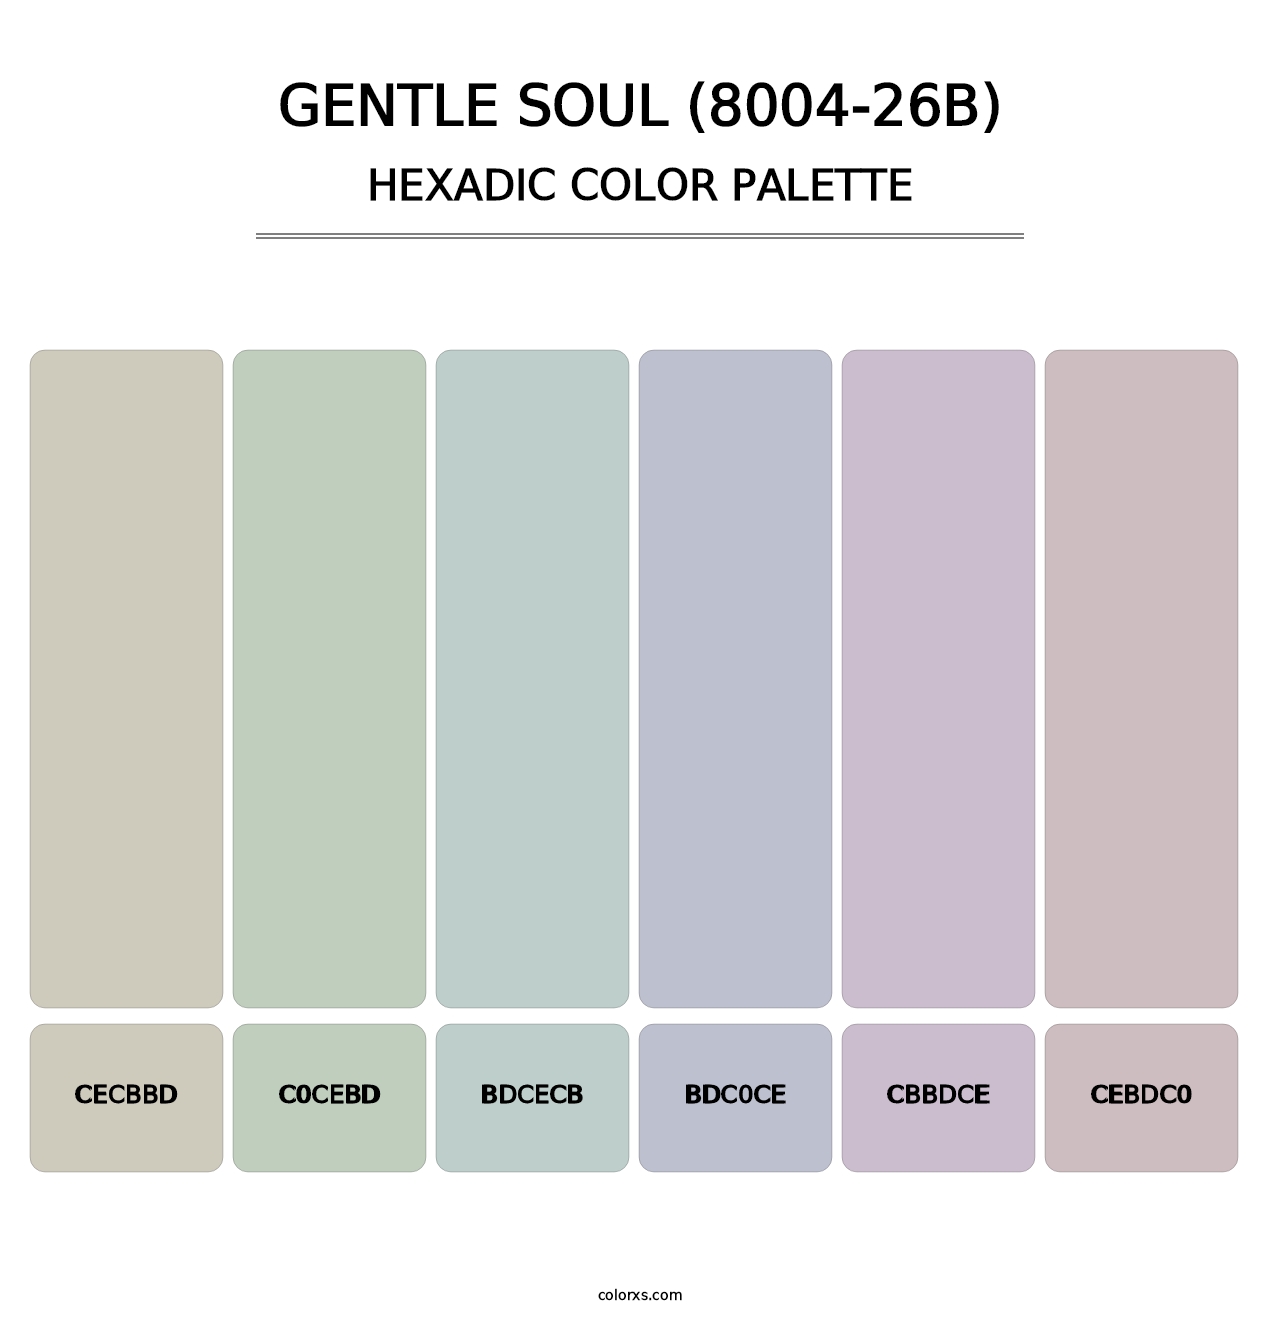 Gentle Soul (8004-26B) - Hexadic Color Palette